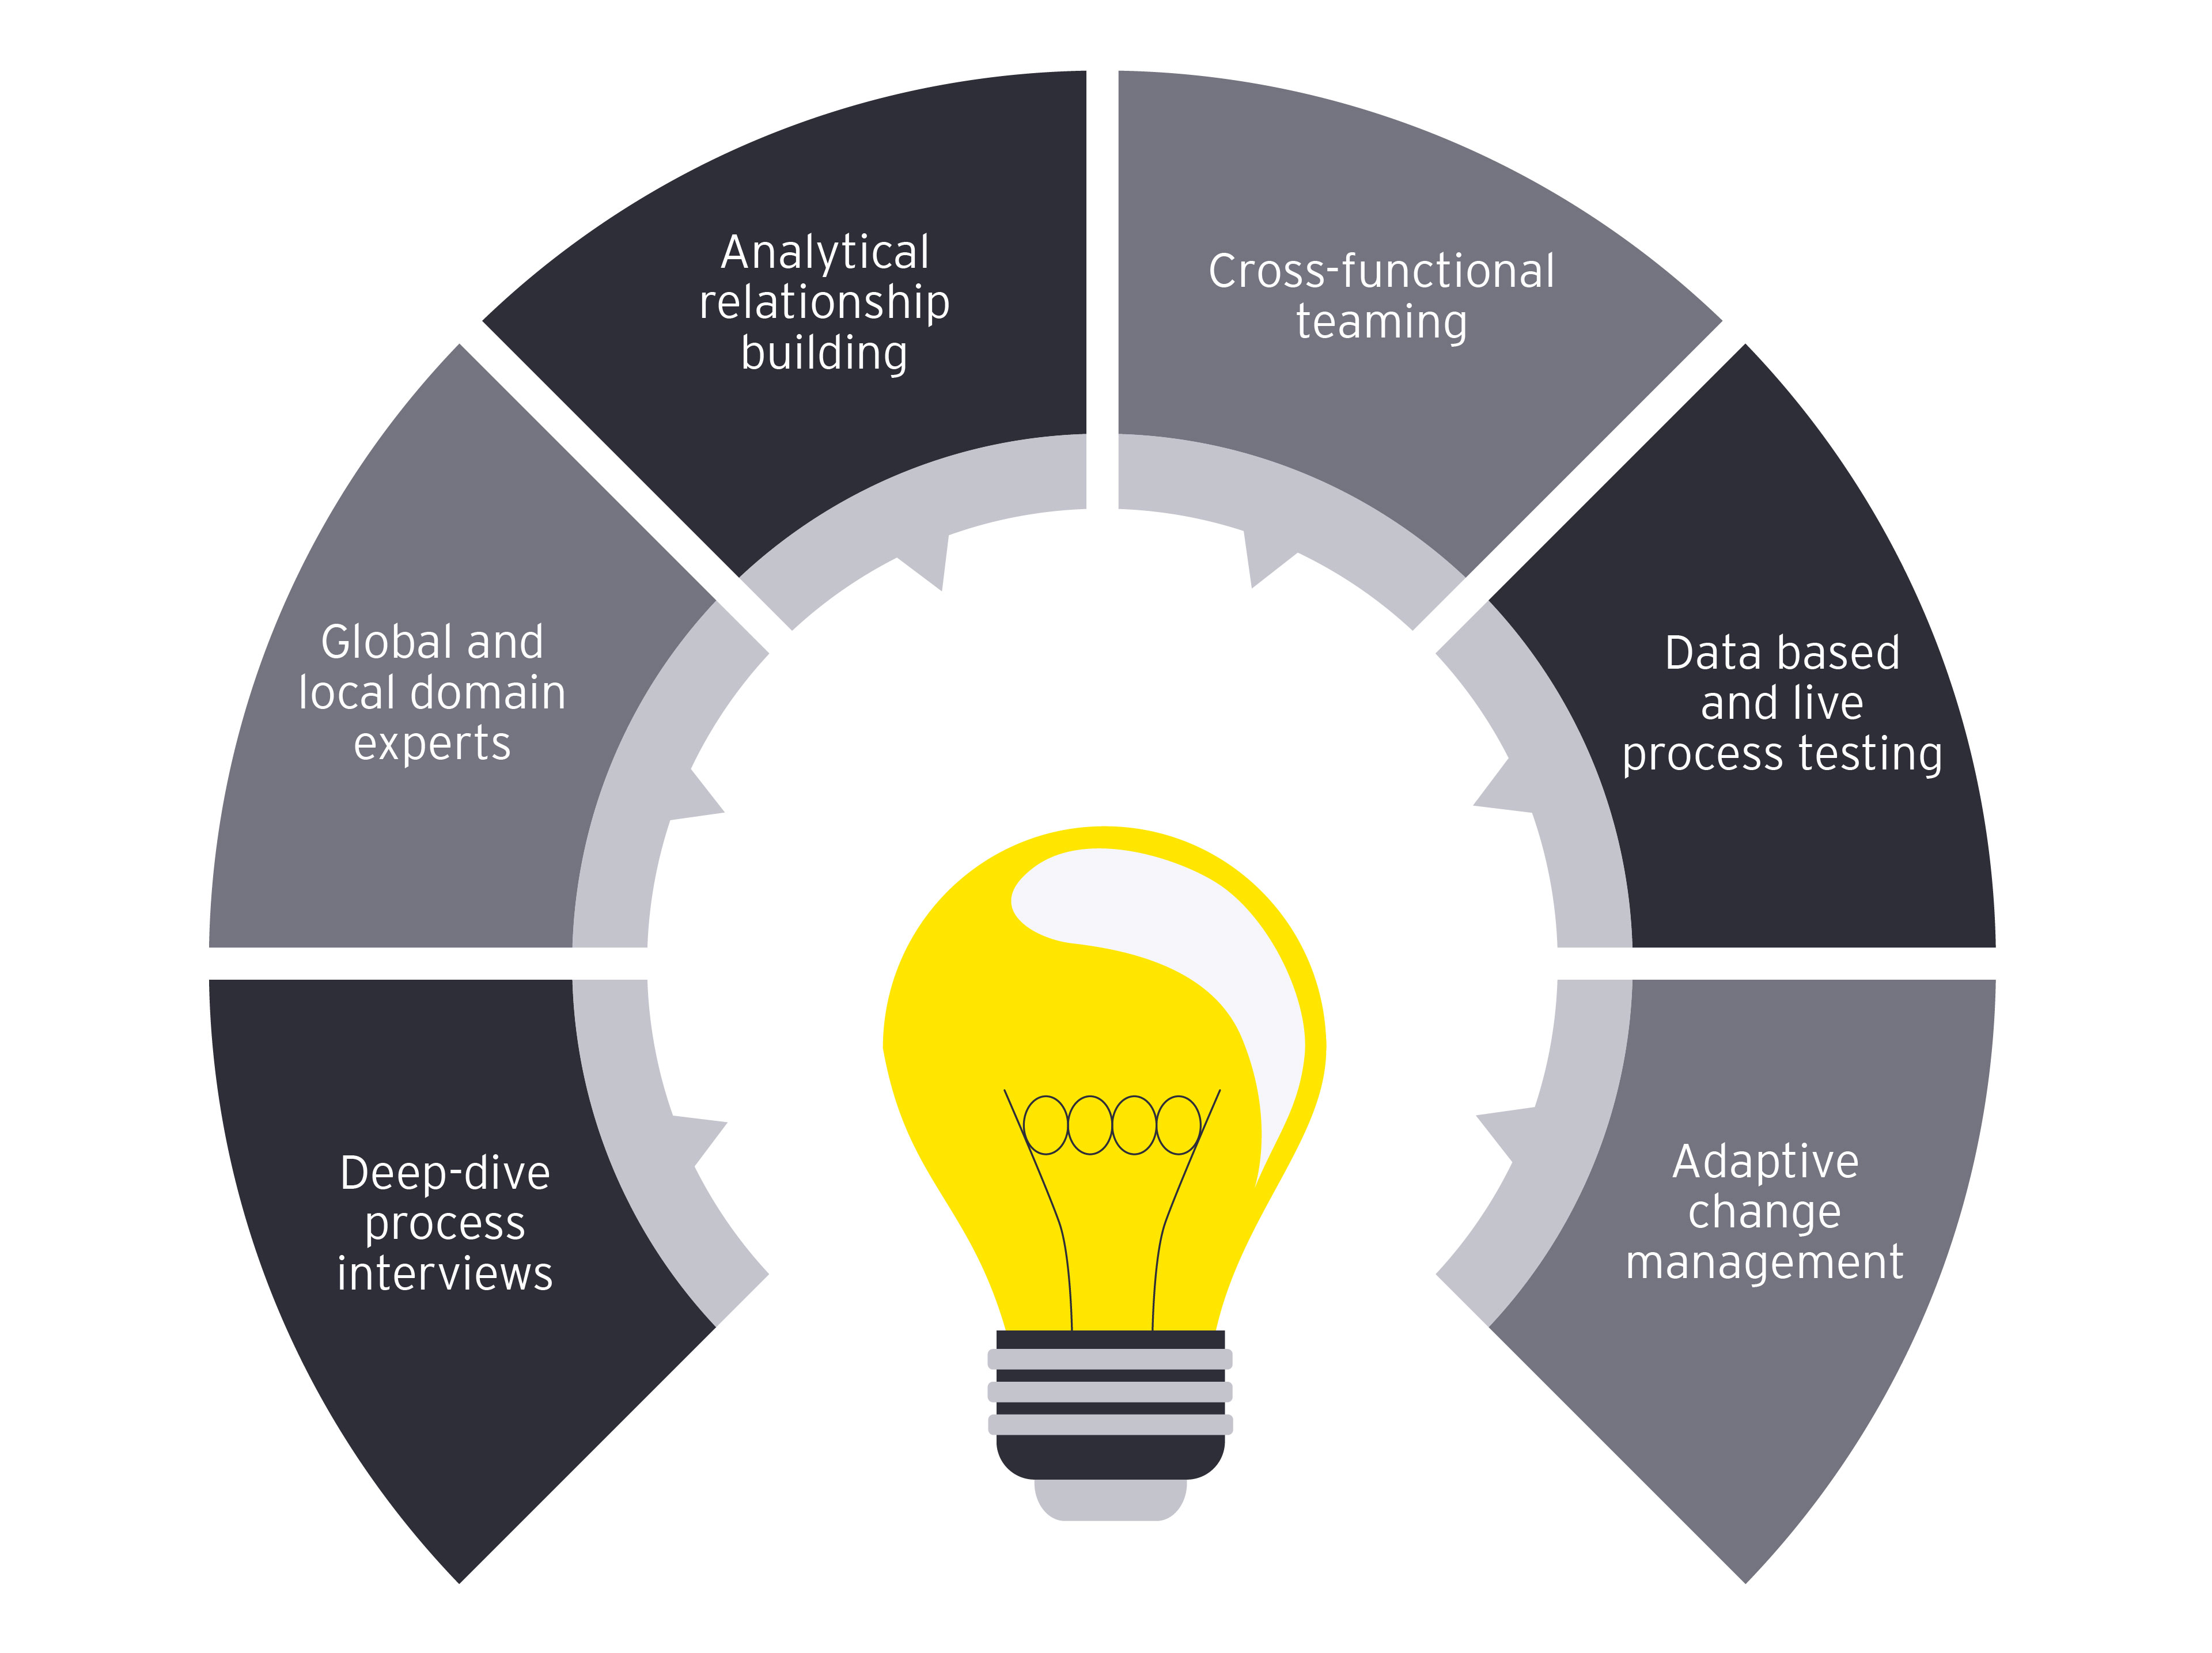 Digital business transformation solutions